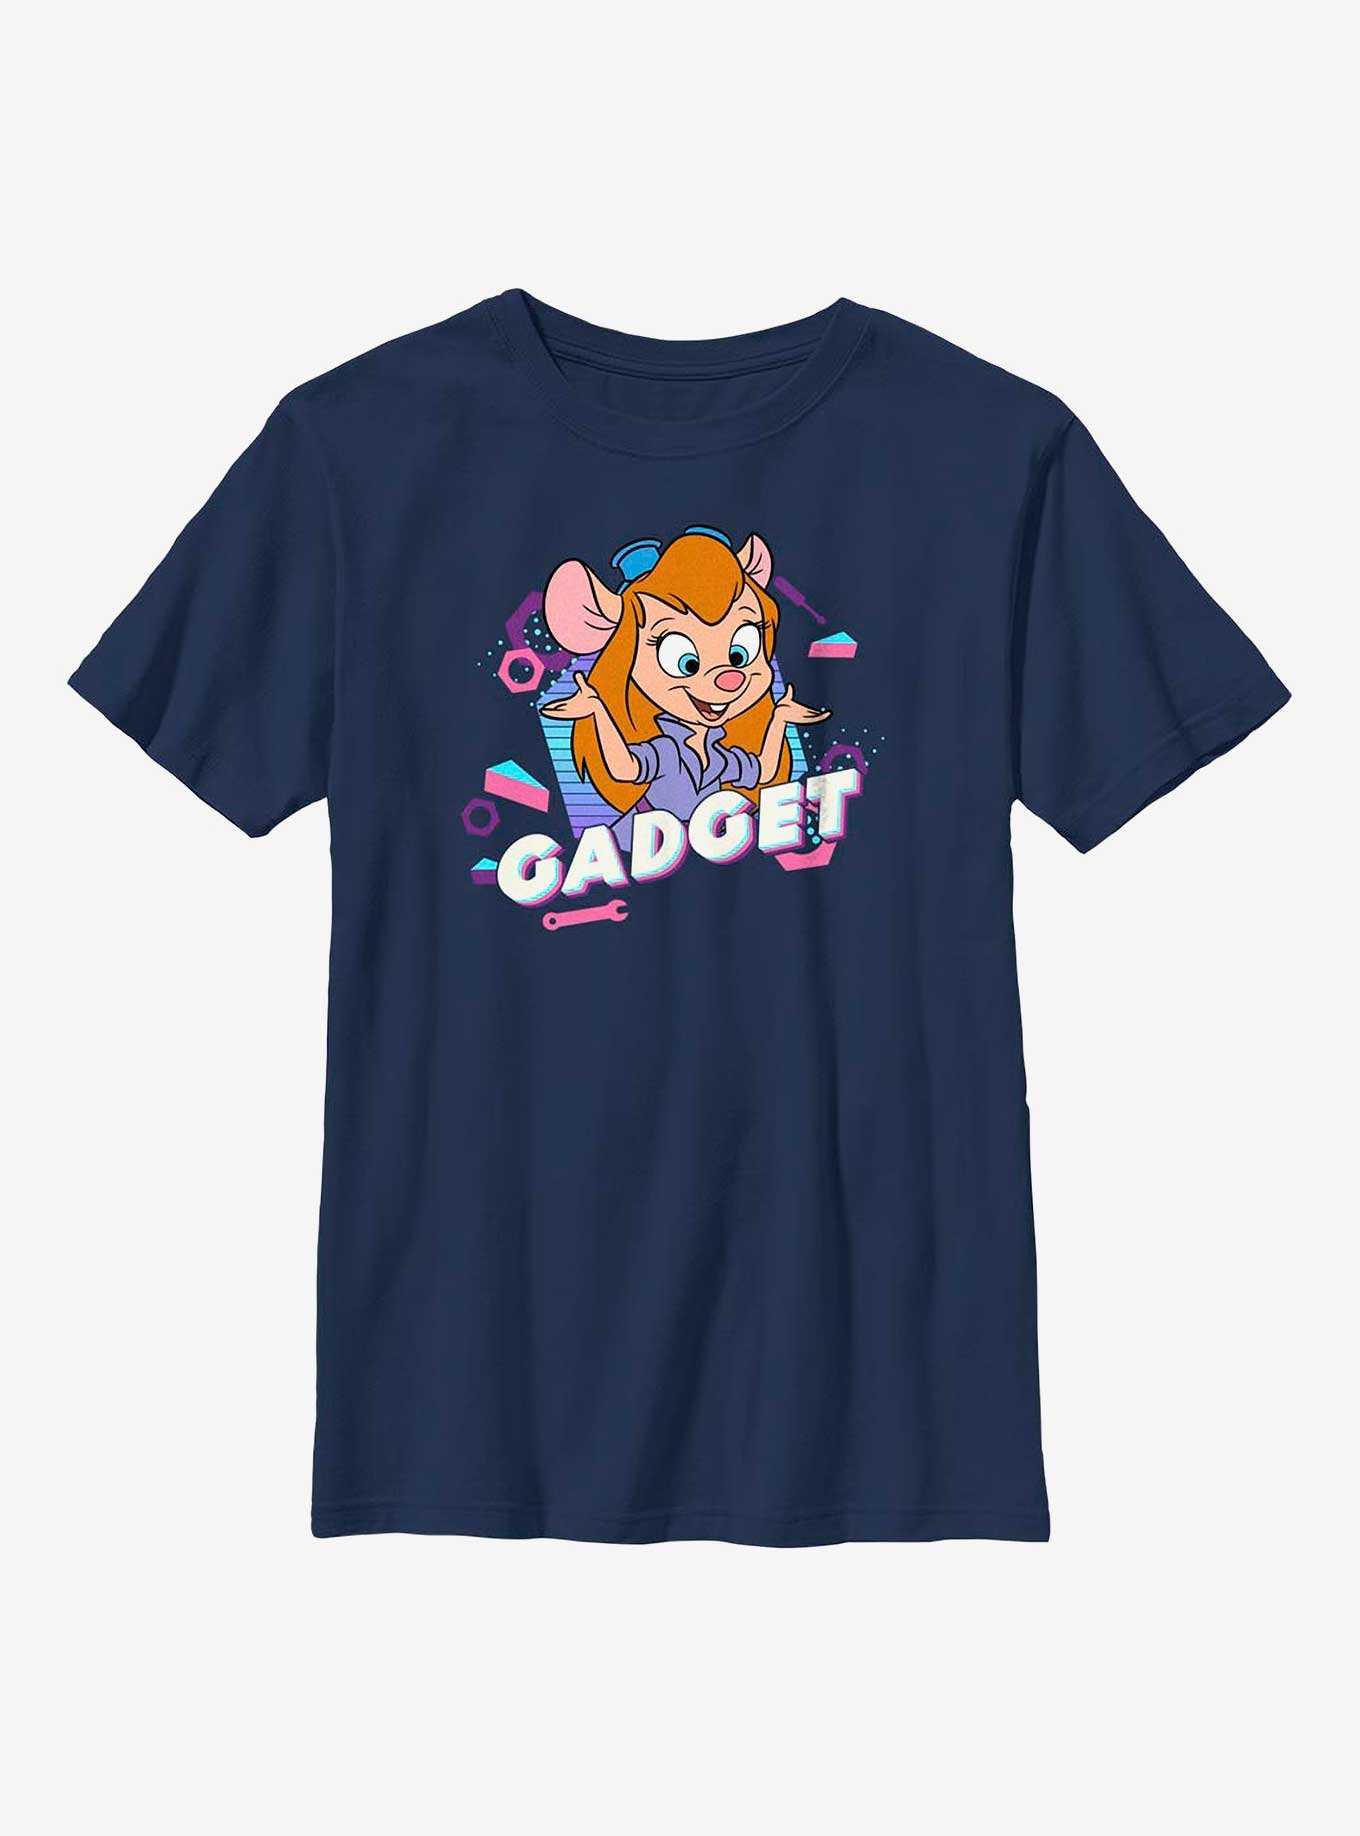 Disney Chip 'n Dale Gadget Youth T-Shirt, , hi-res